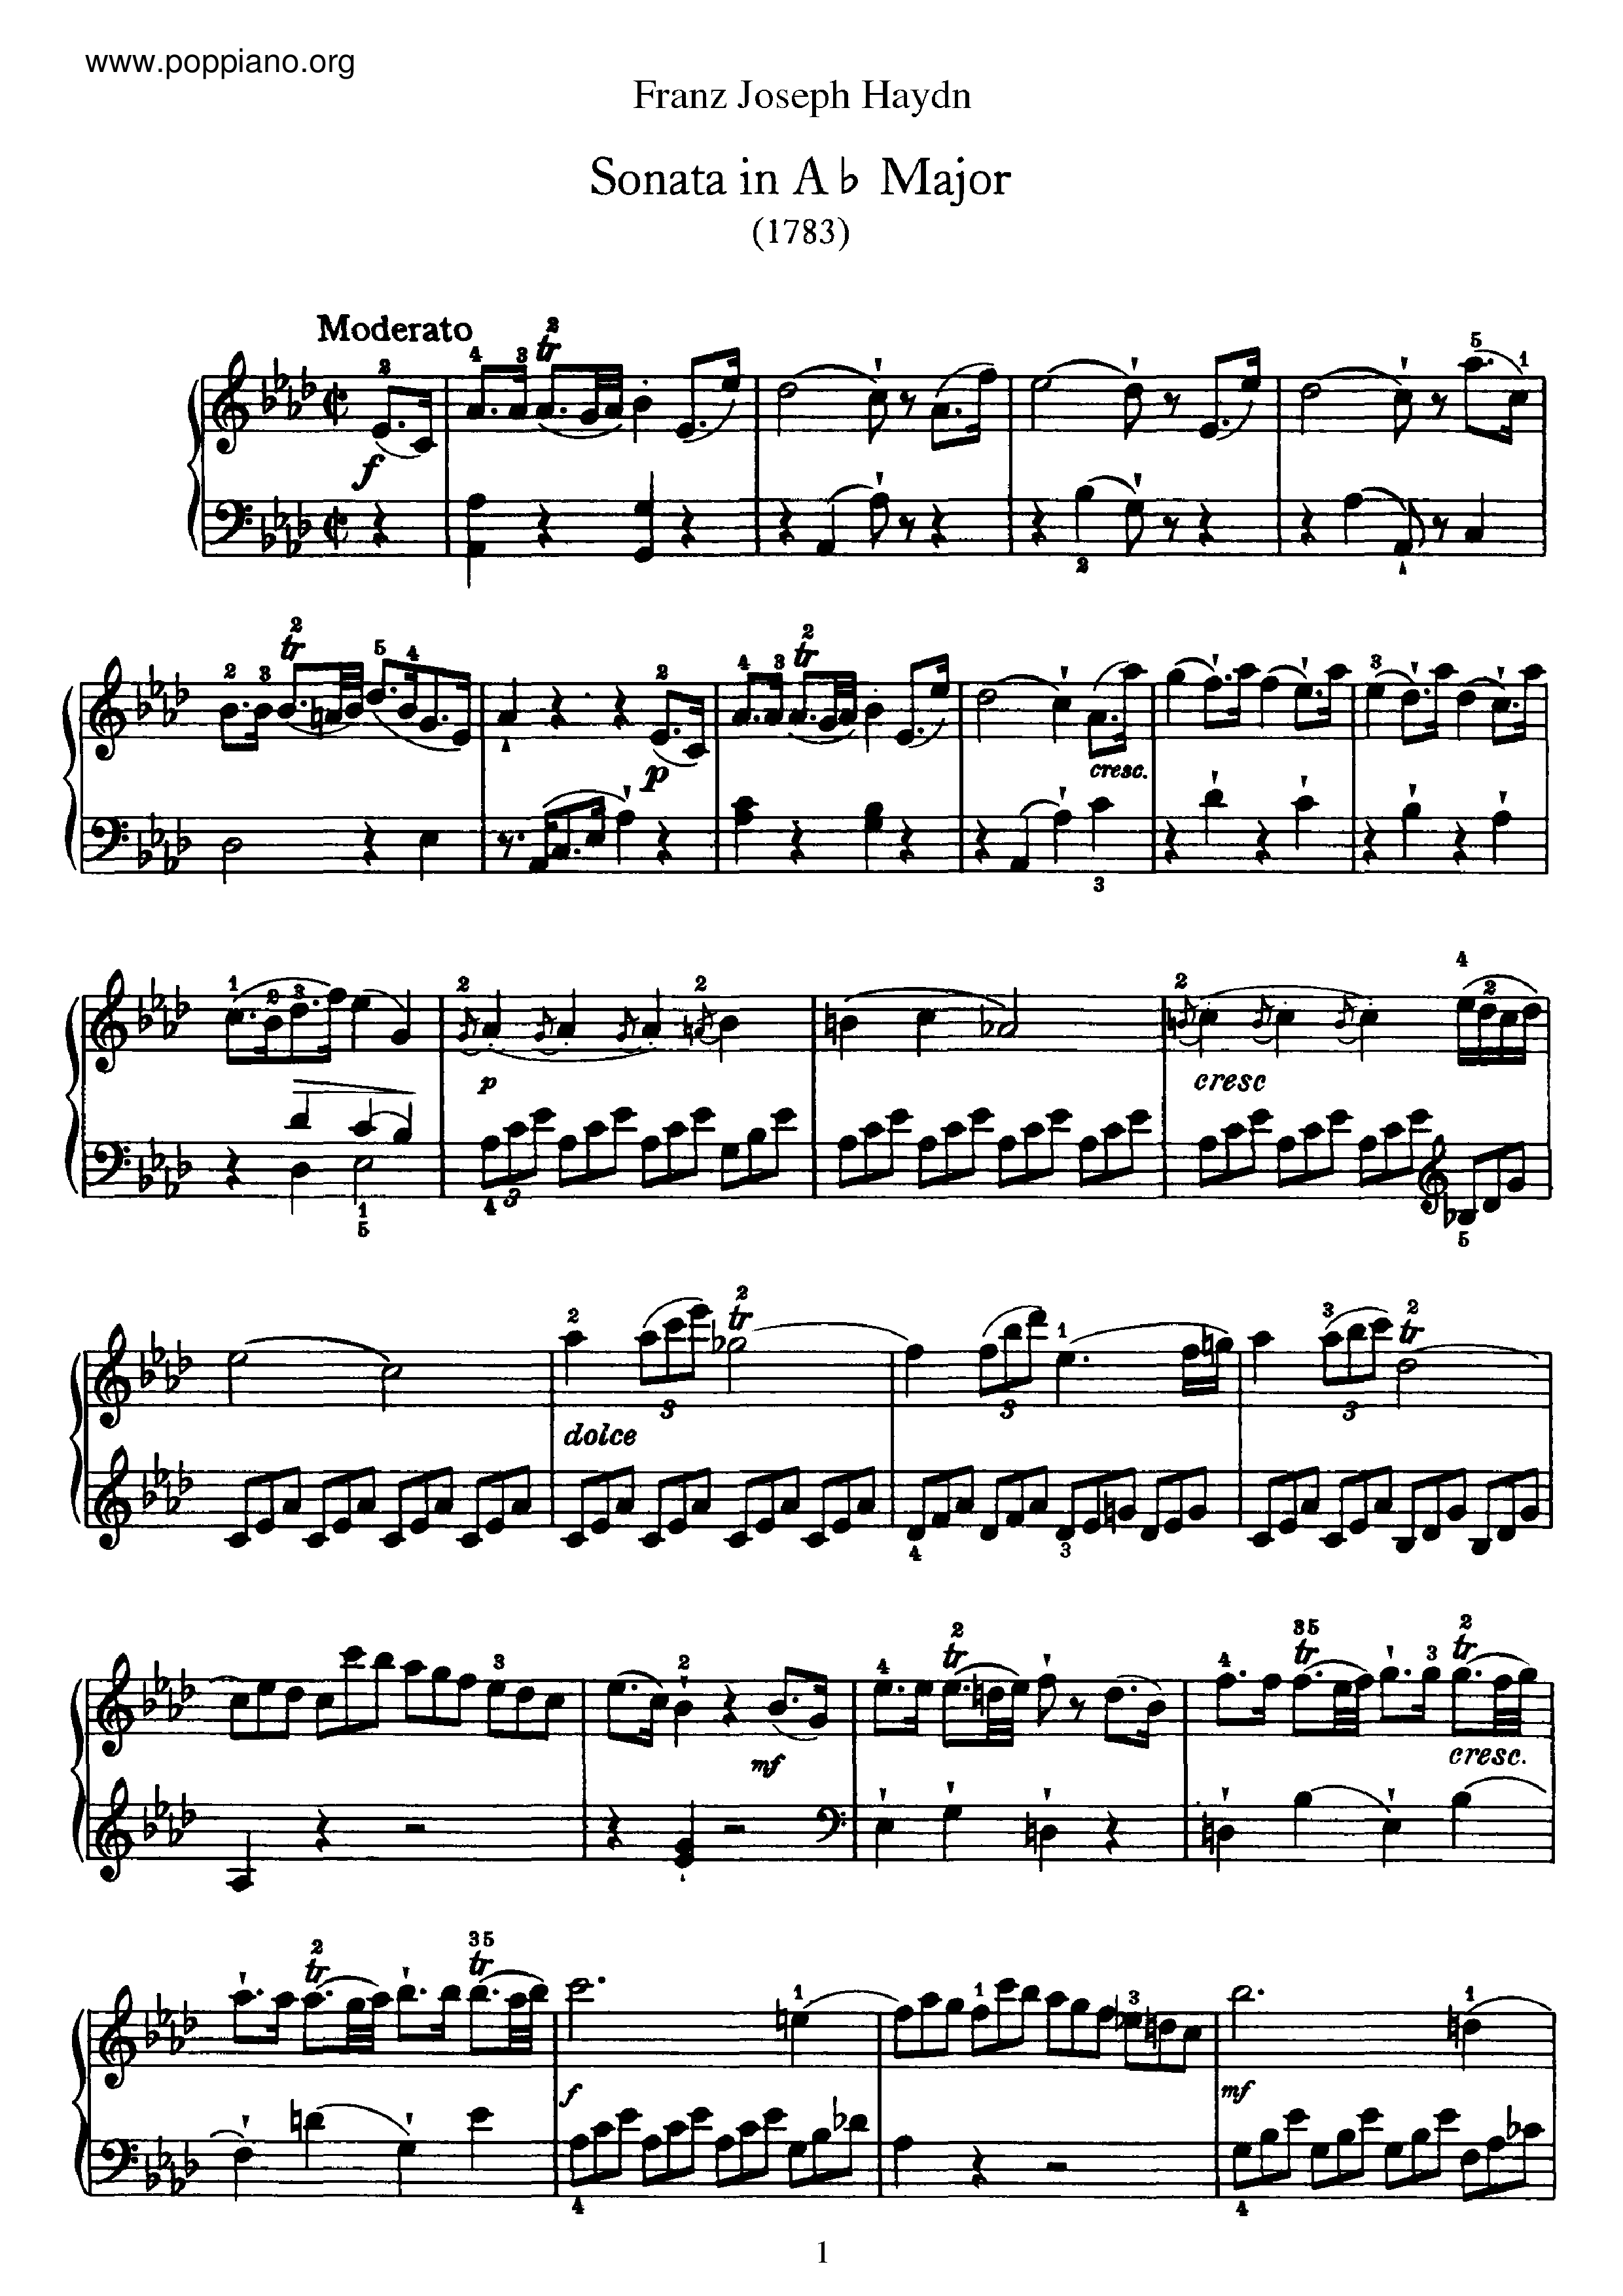 Sonata No.43 in A flat majorピアノ譜